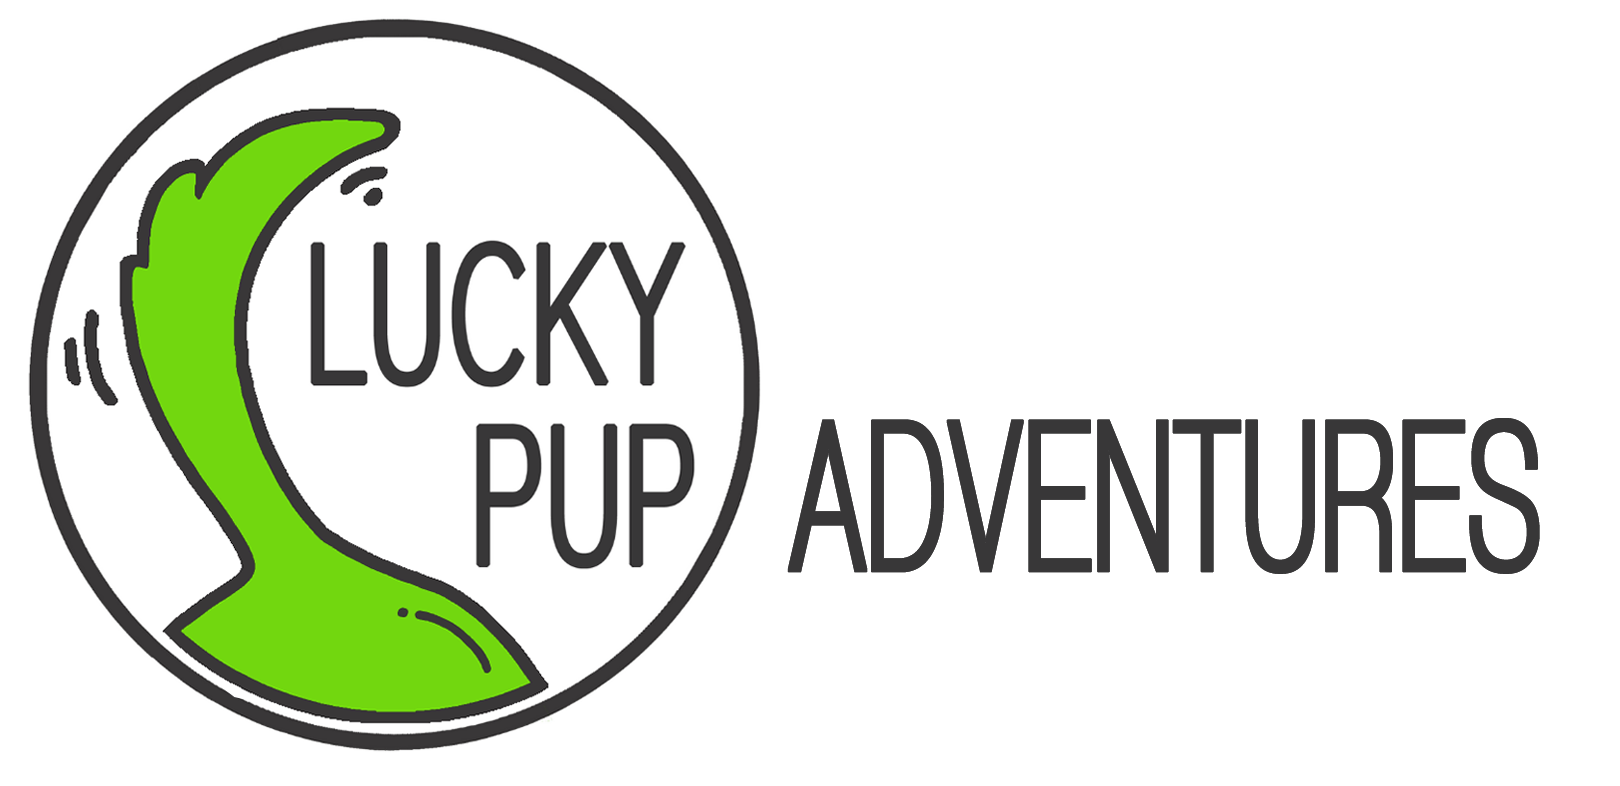  Lucky Pup Adventures - Sioux Falls, SD   https://luckypupadventures.com/  